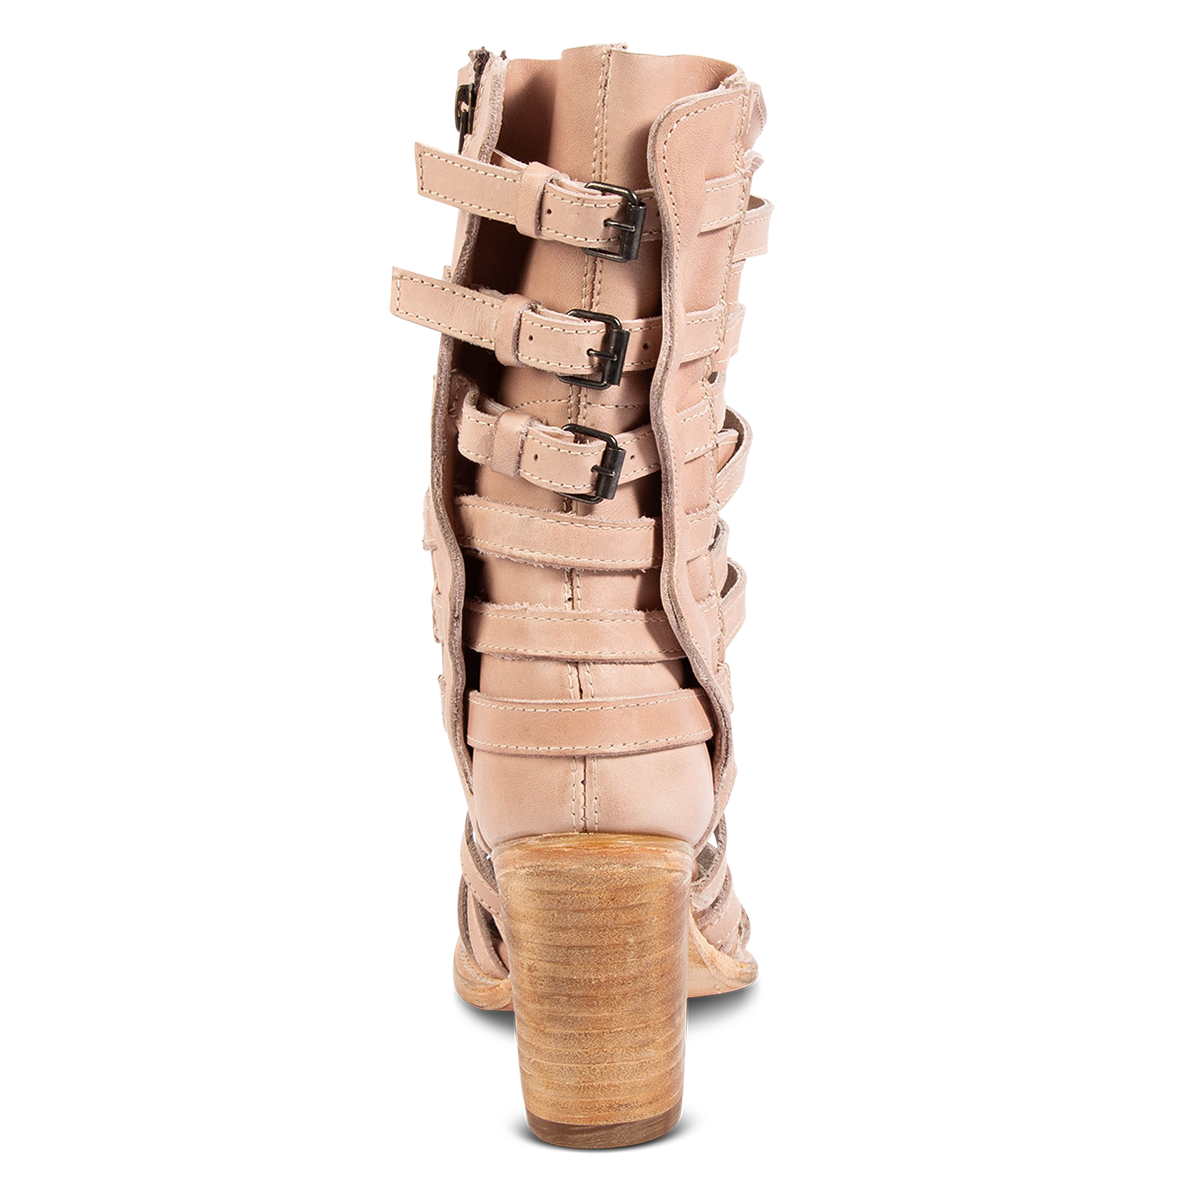 Back view showing an adjustable panel and block heel on FREEBIRD women's Makayla blush leather sandal